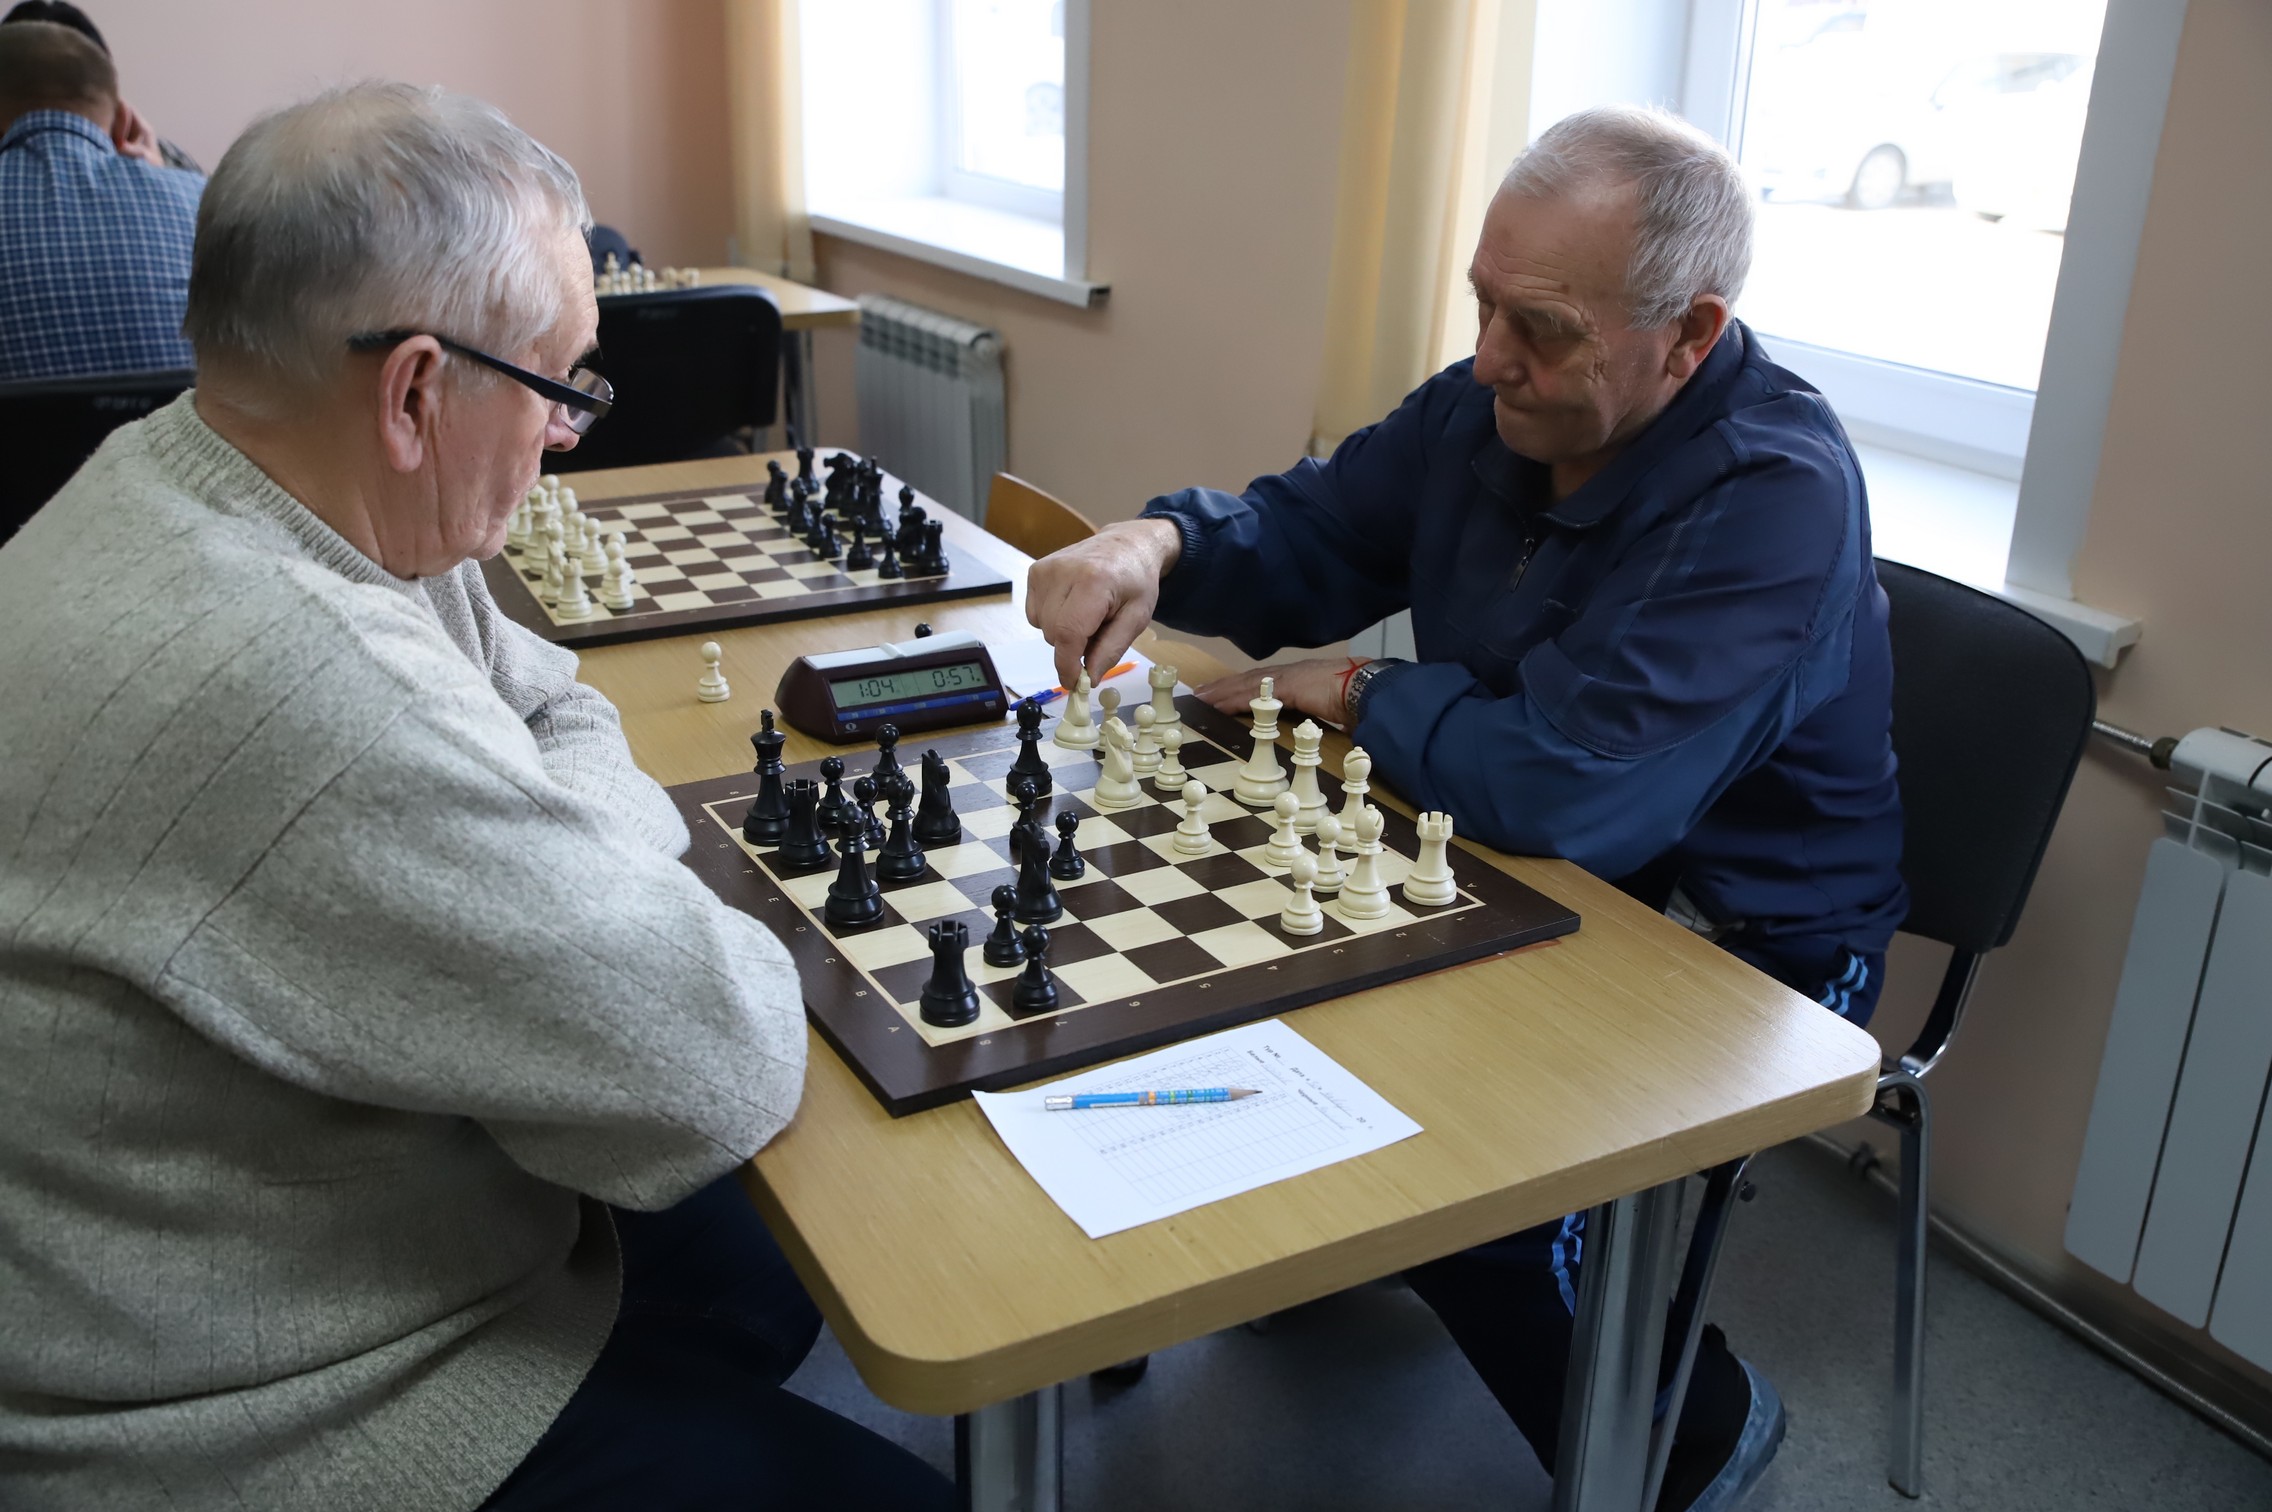 Первенство области по шахматам среди ветеранов